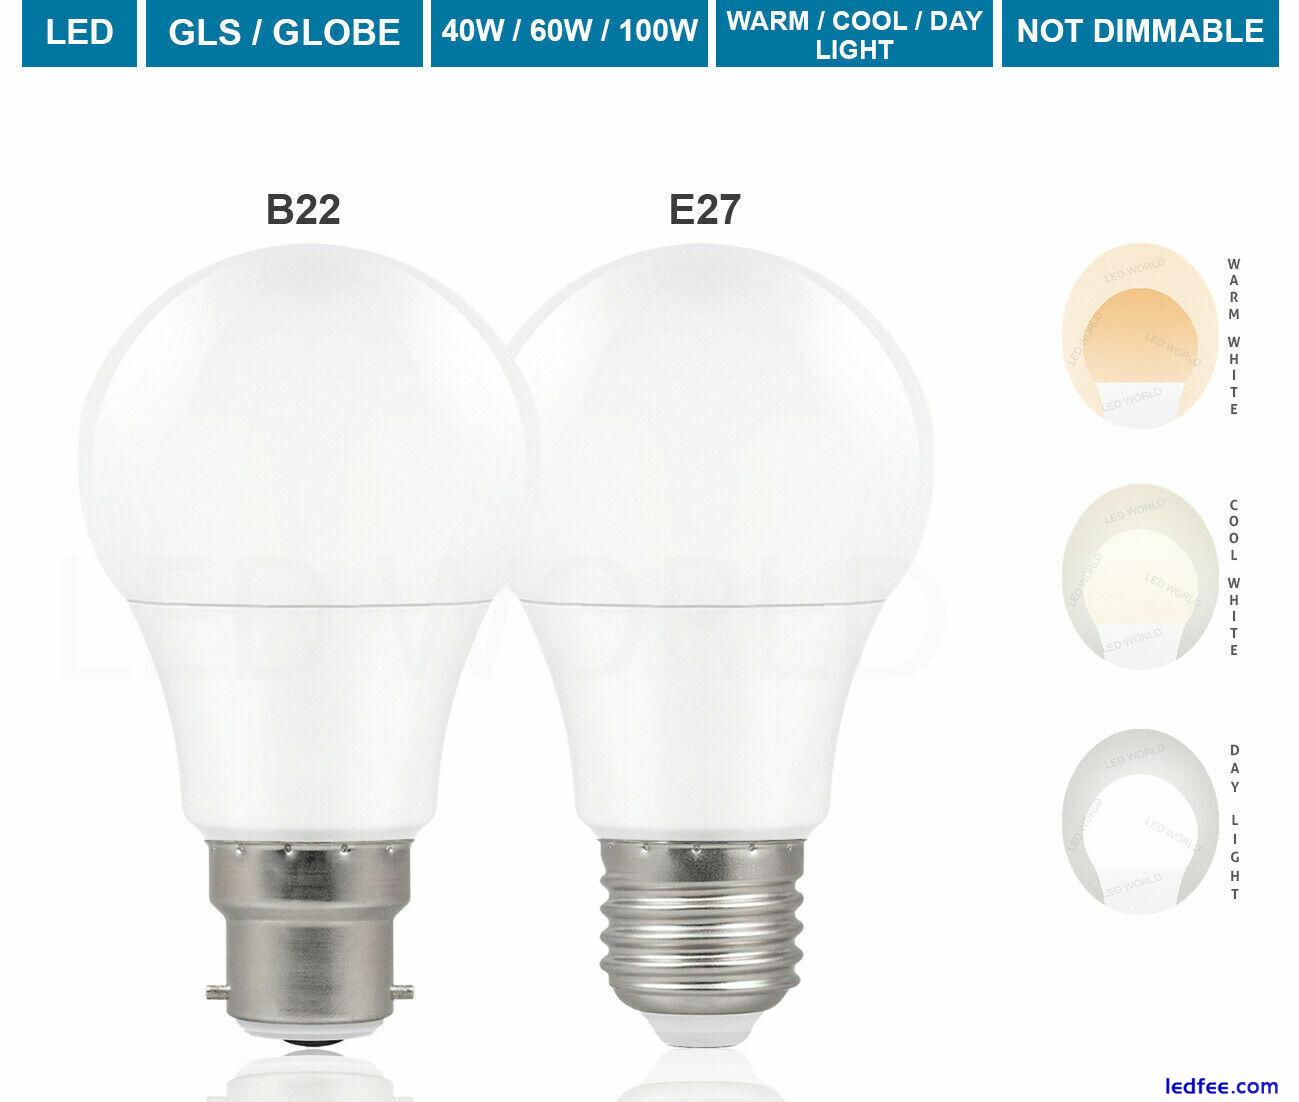 LED 6W 10W 15W BC B22 ES E27 GLS Light Bulbs Warm Cool White A+ Lighting 4 